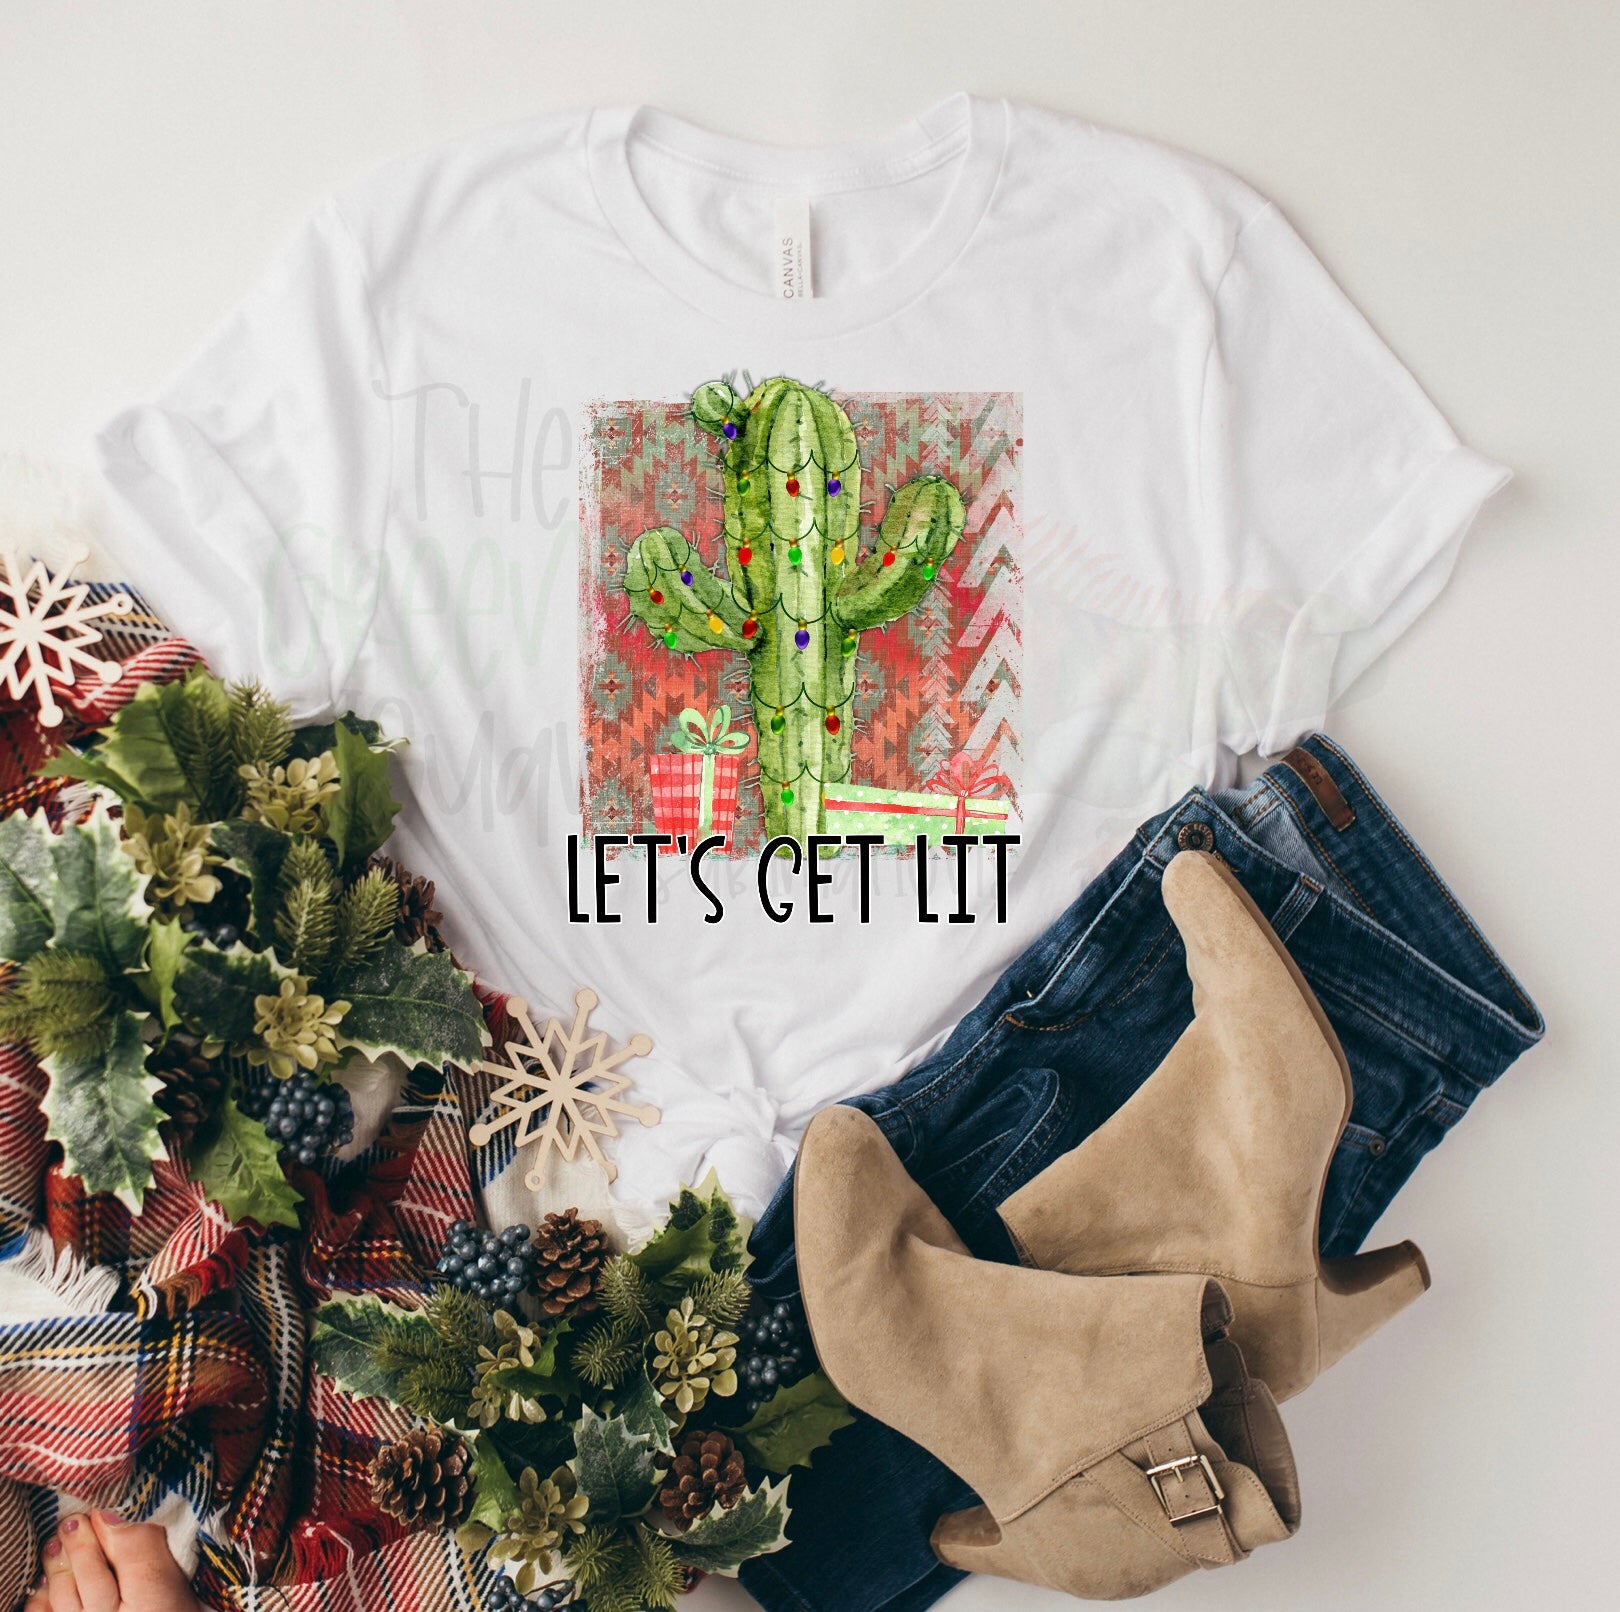 Let’s get lit (Christmas cactus)